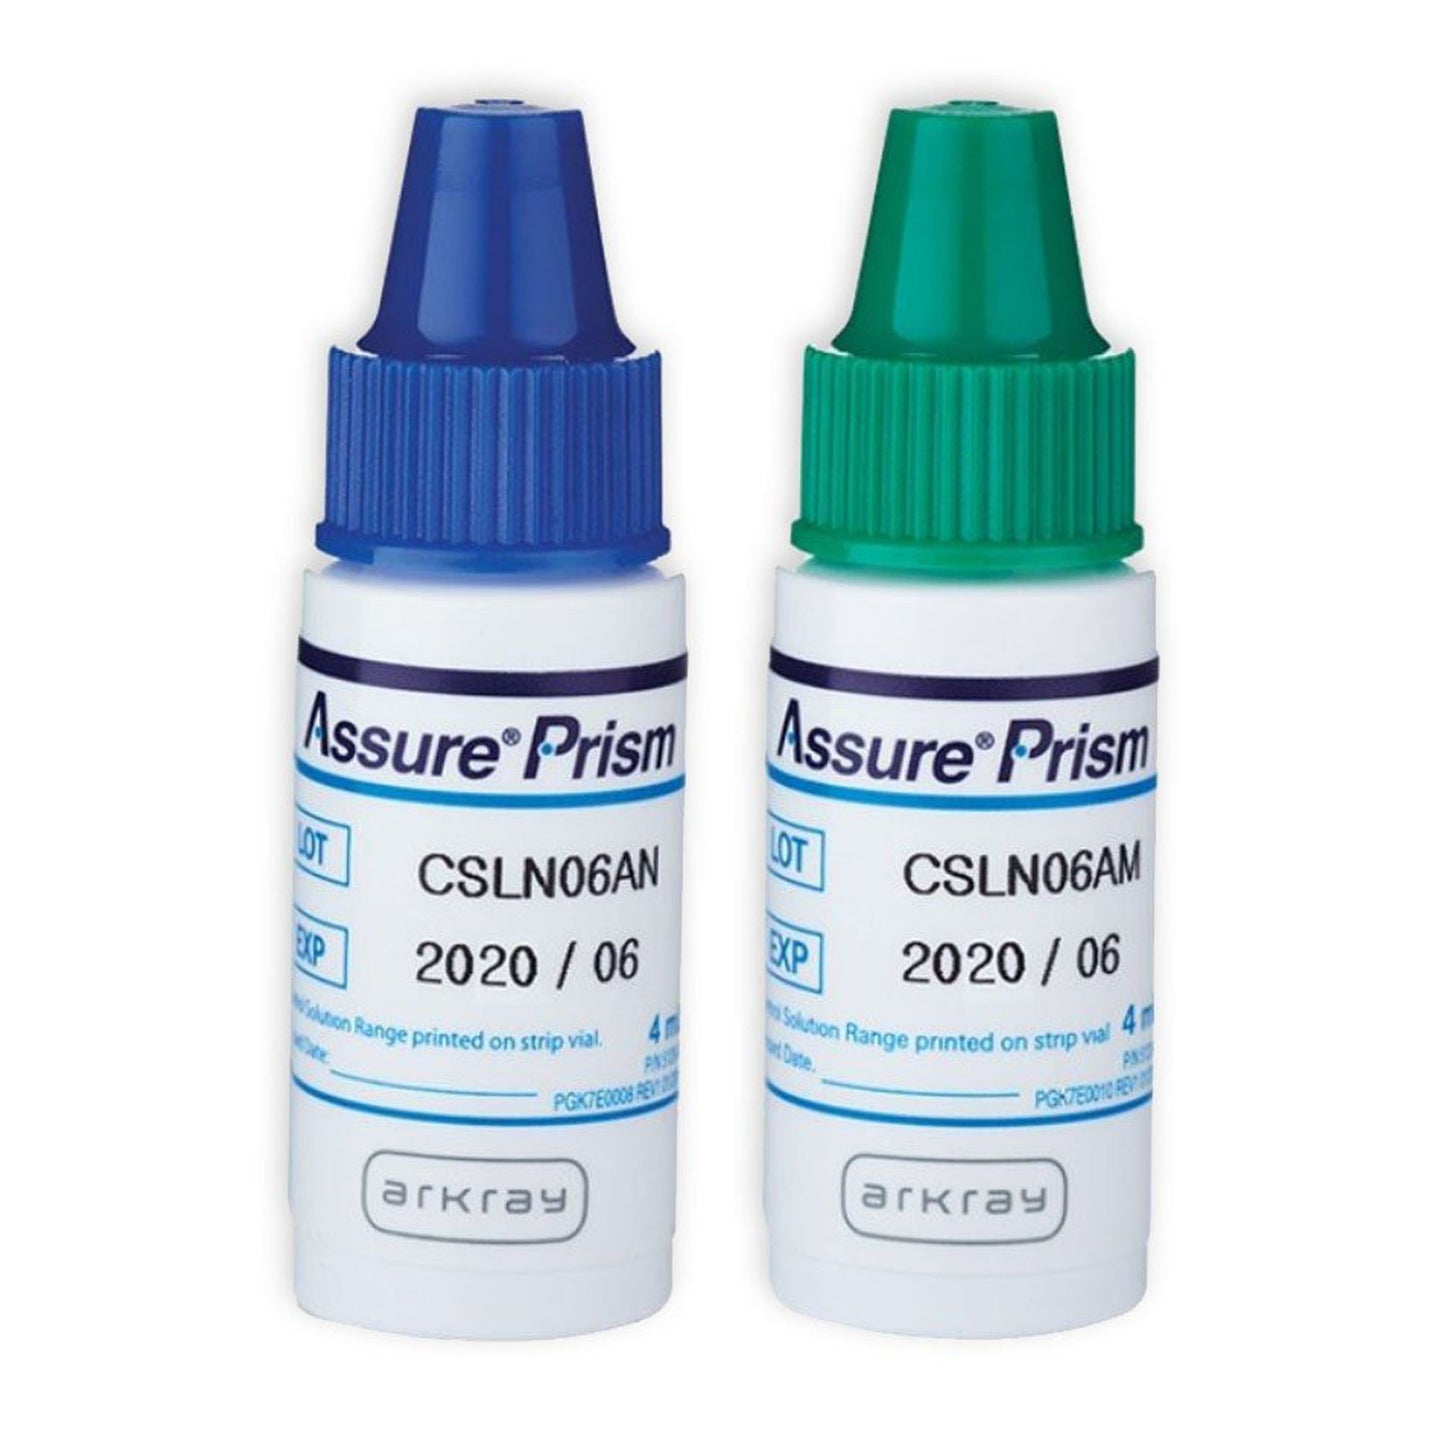 Assure® Prism Control Blood Glucose Test, 2 Levels